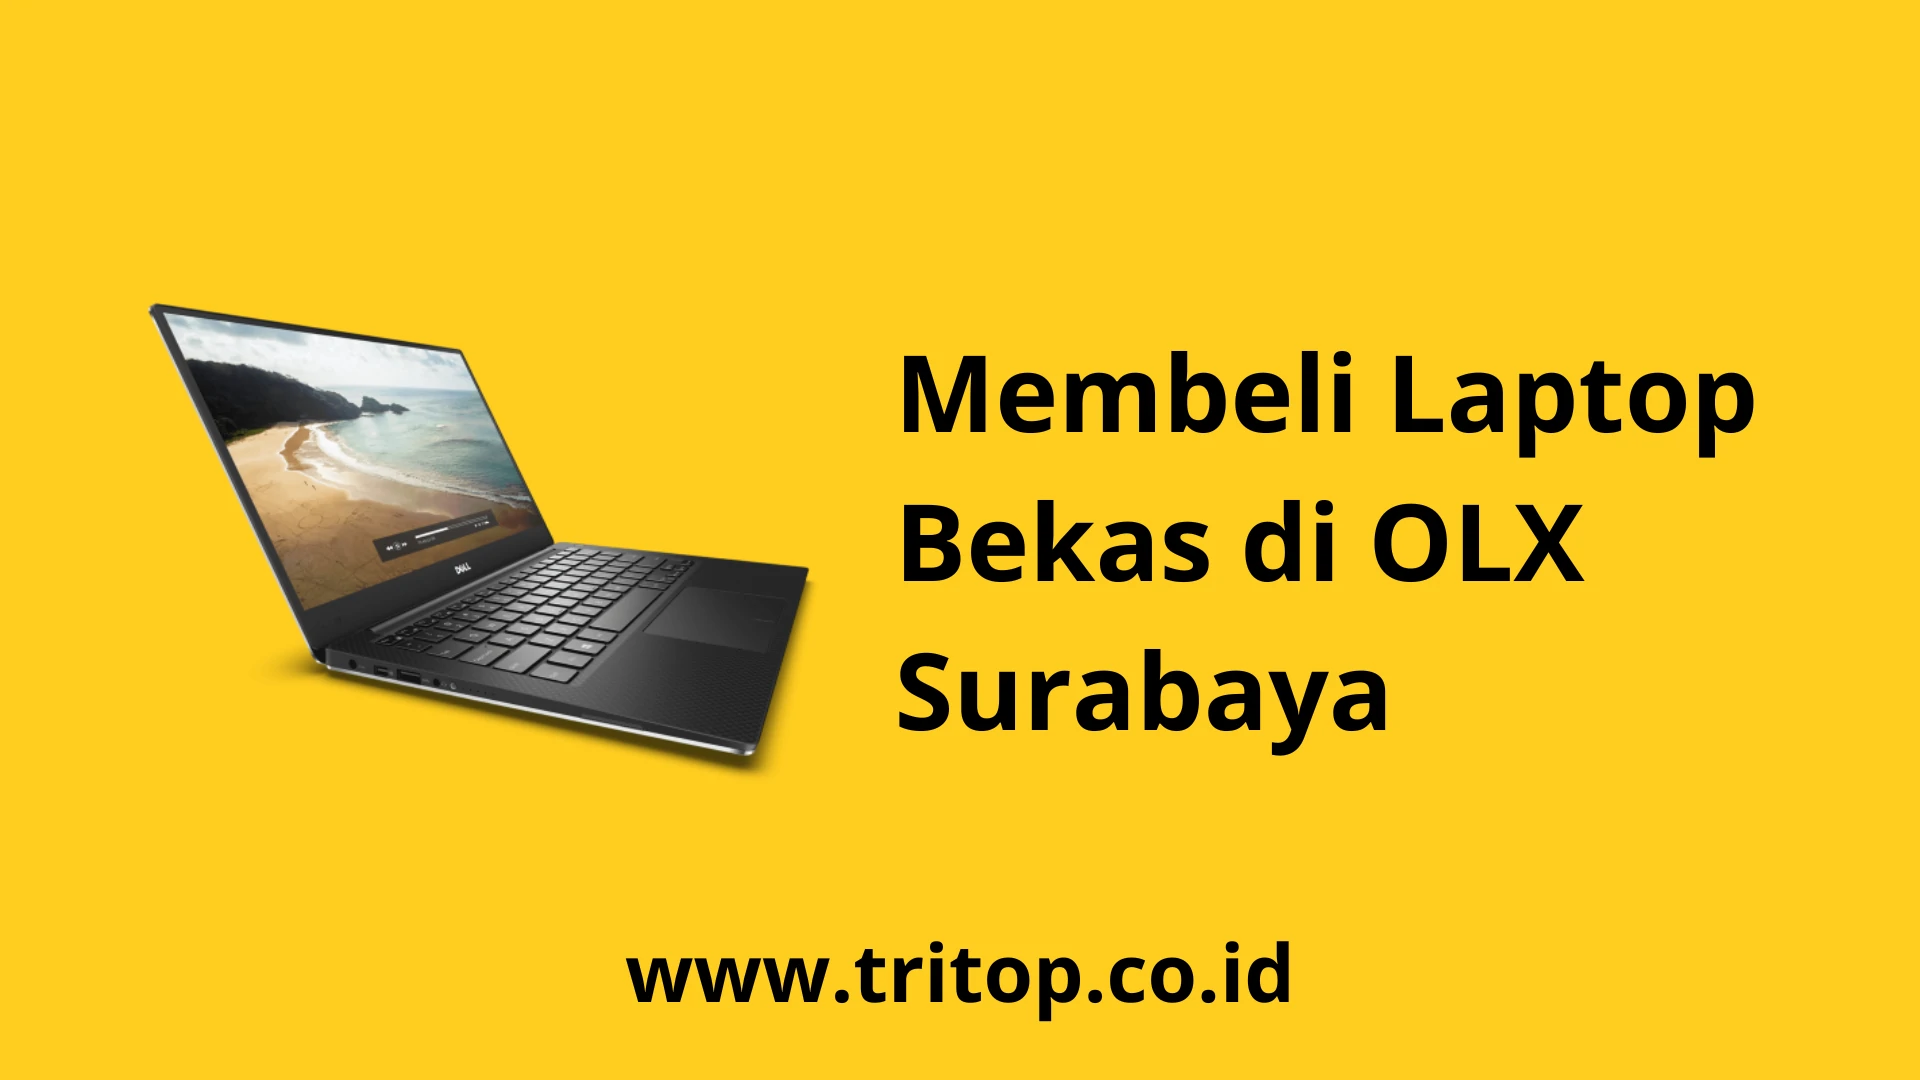 Laptop Bekas OLX Surabaya Tritop.co.id